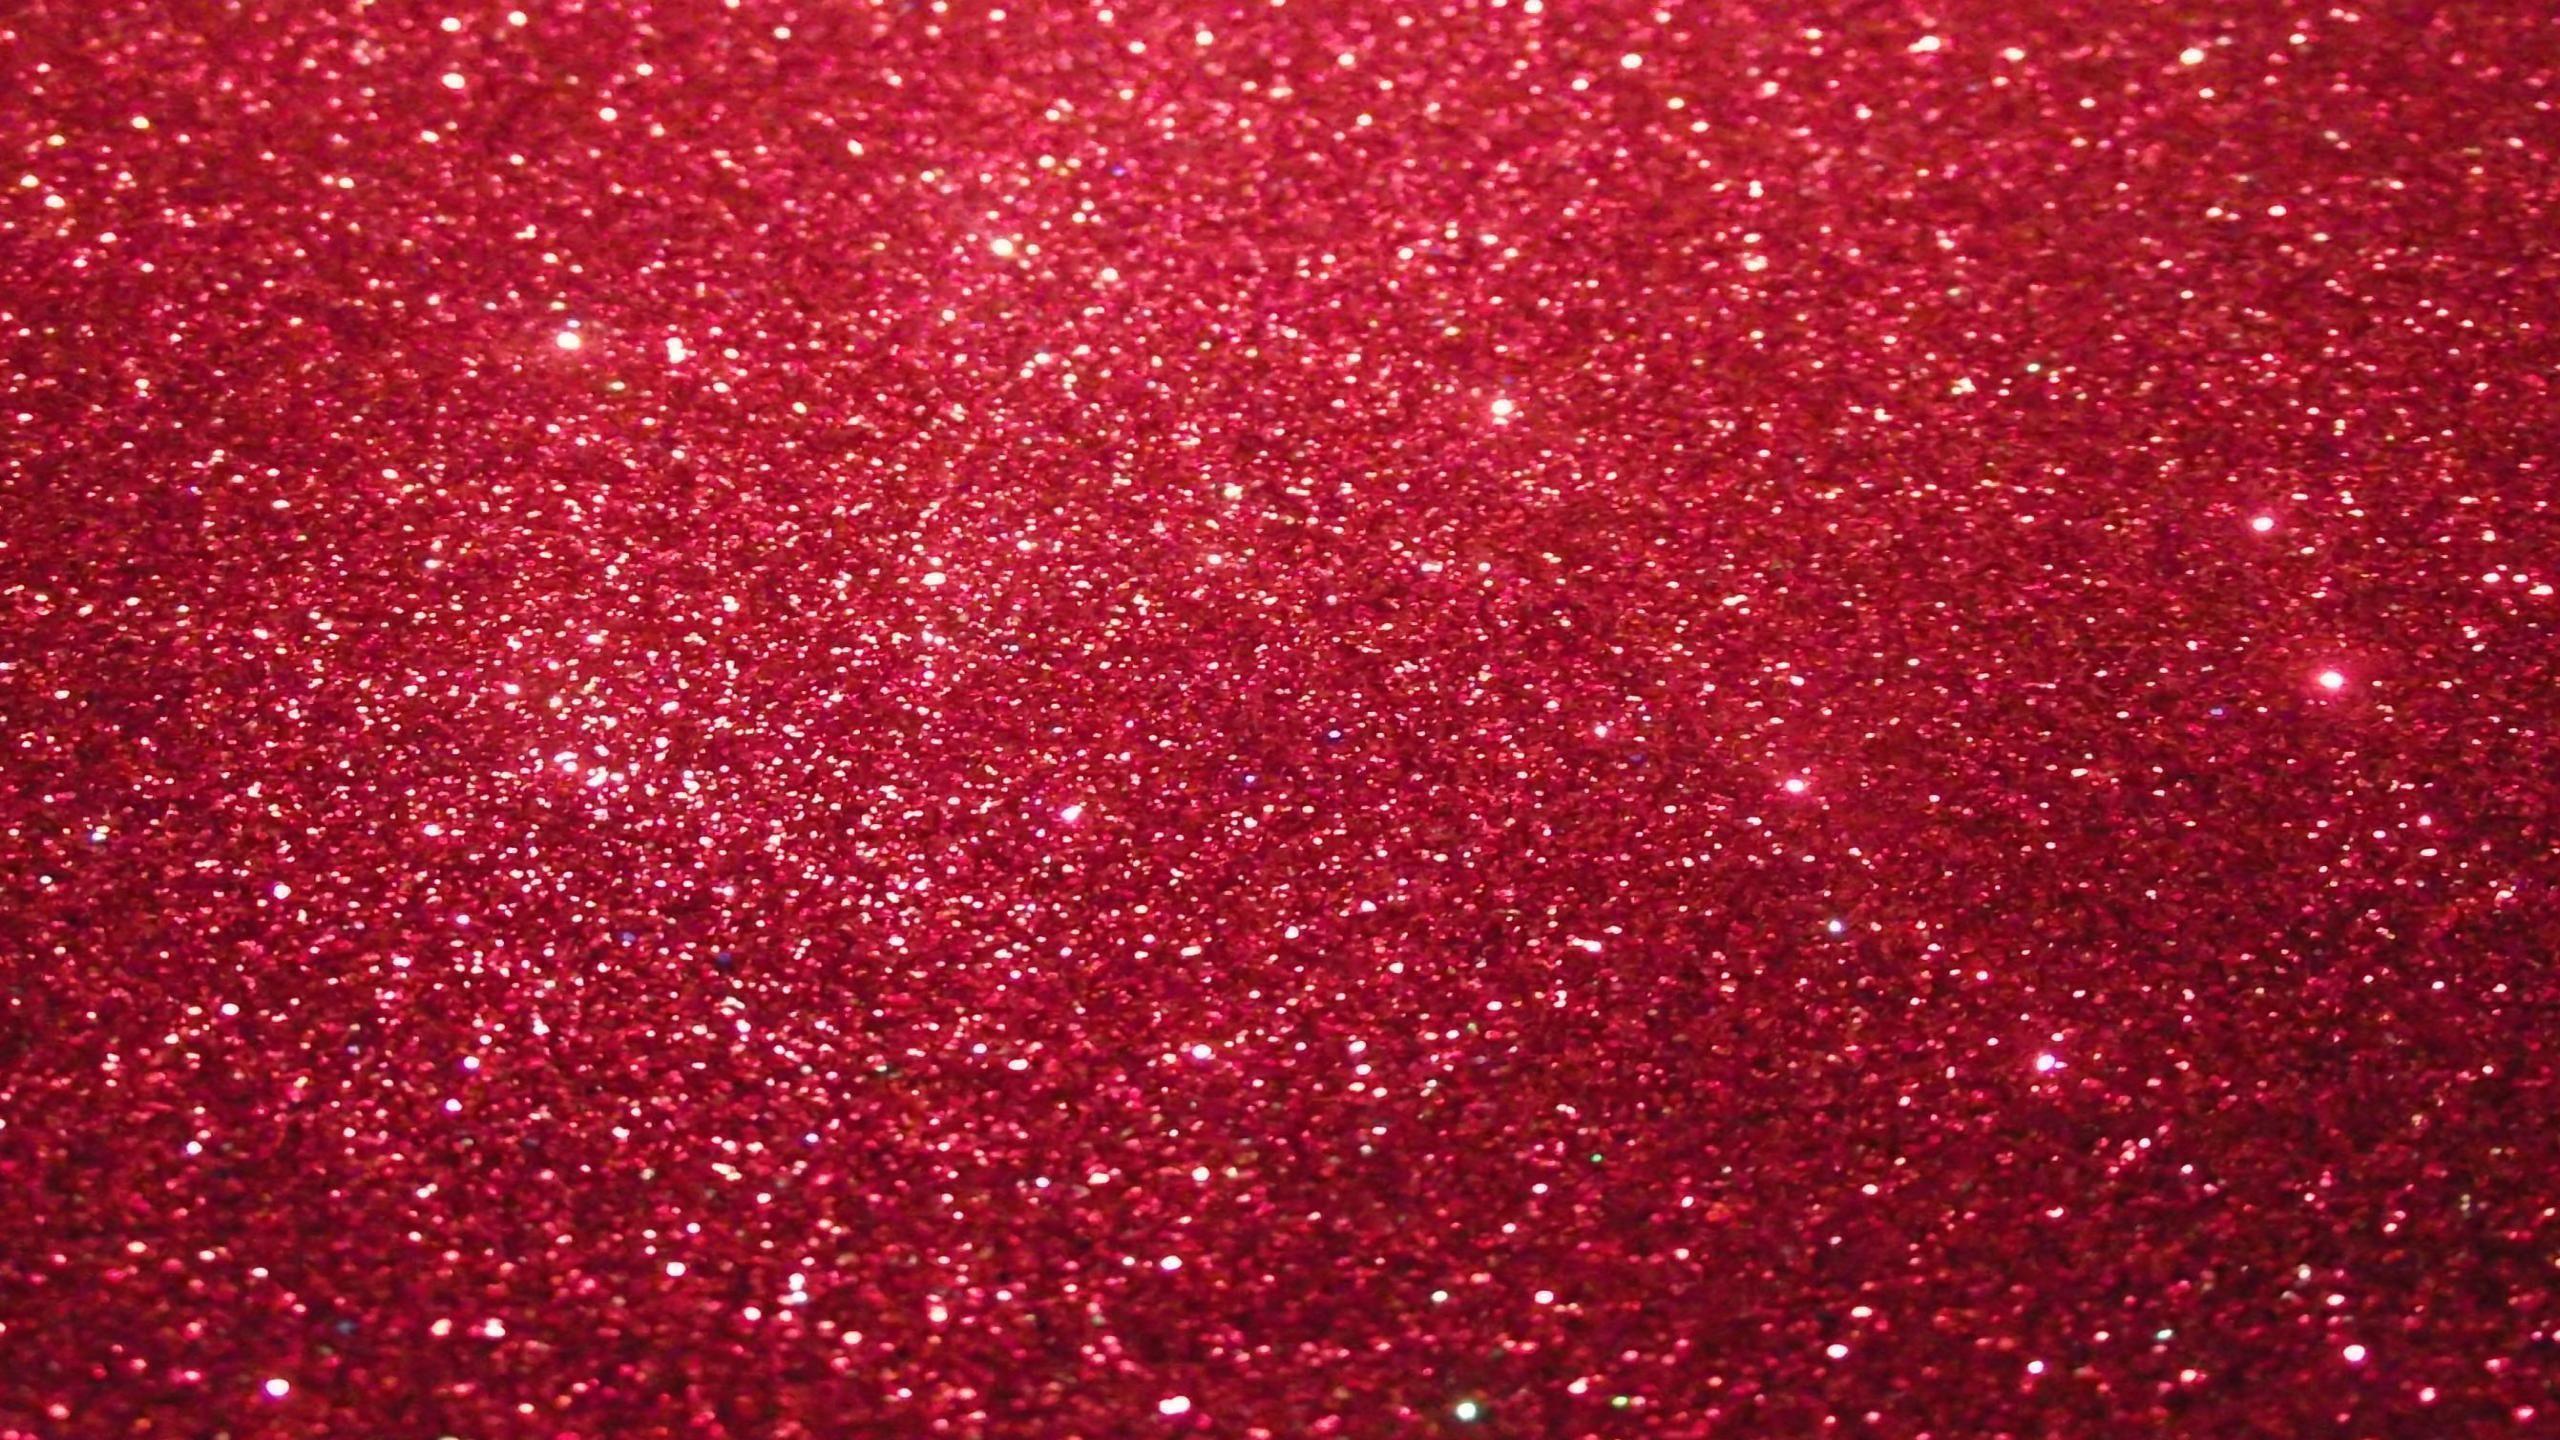 Dark Red Glitter Wallpapers - Top Free Dark Red Glitter Backgrounds ...